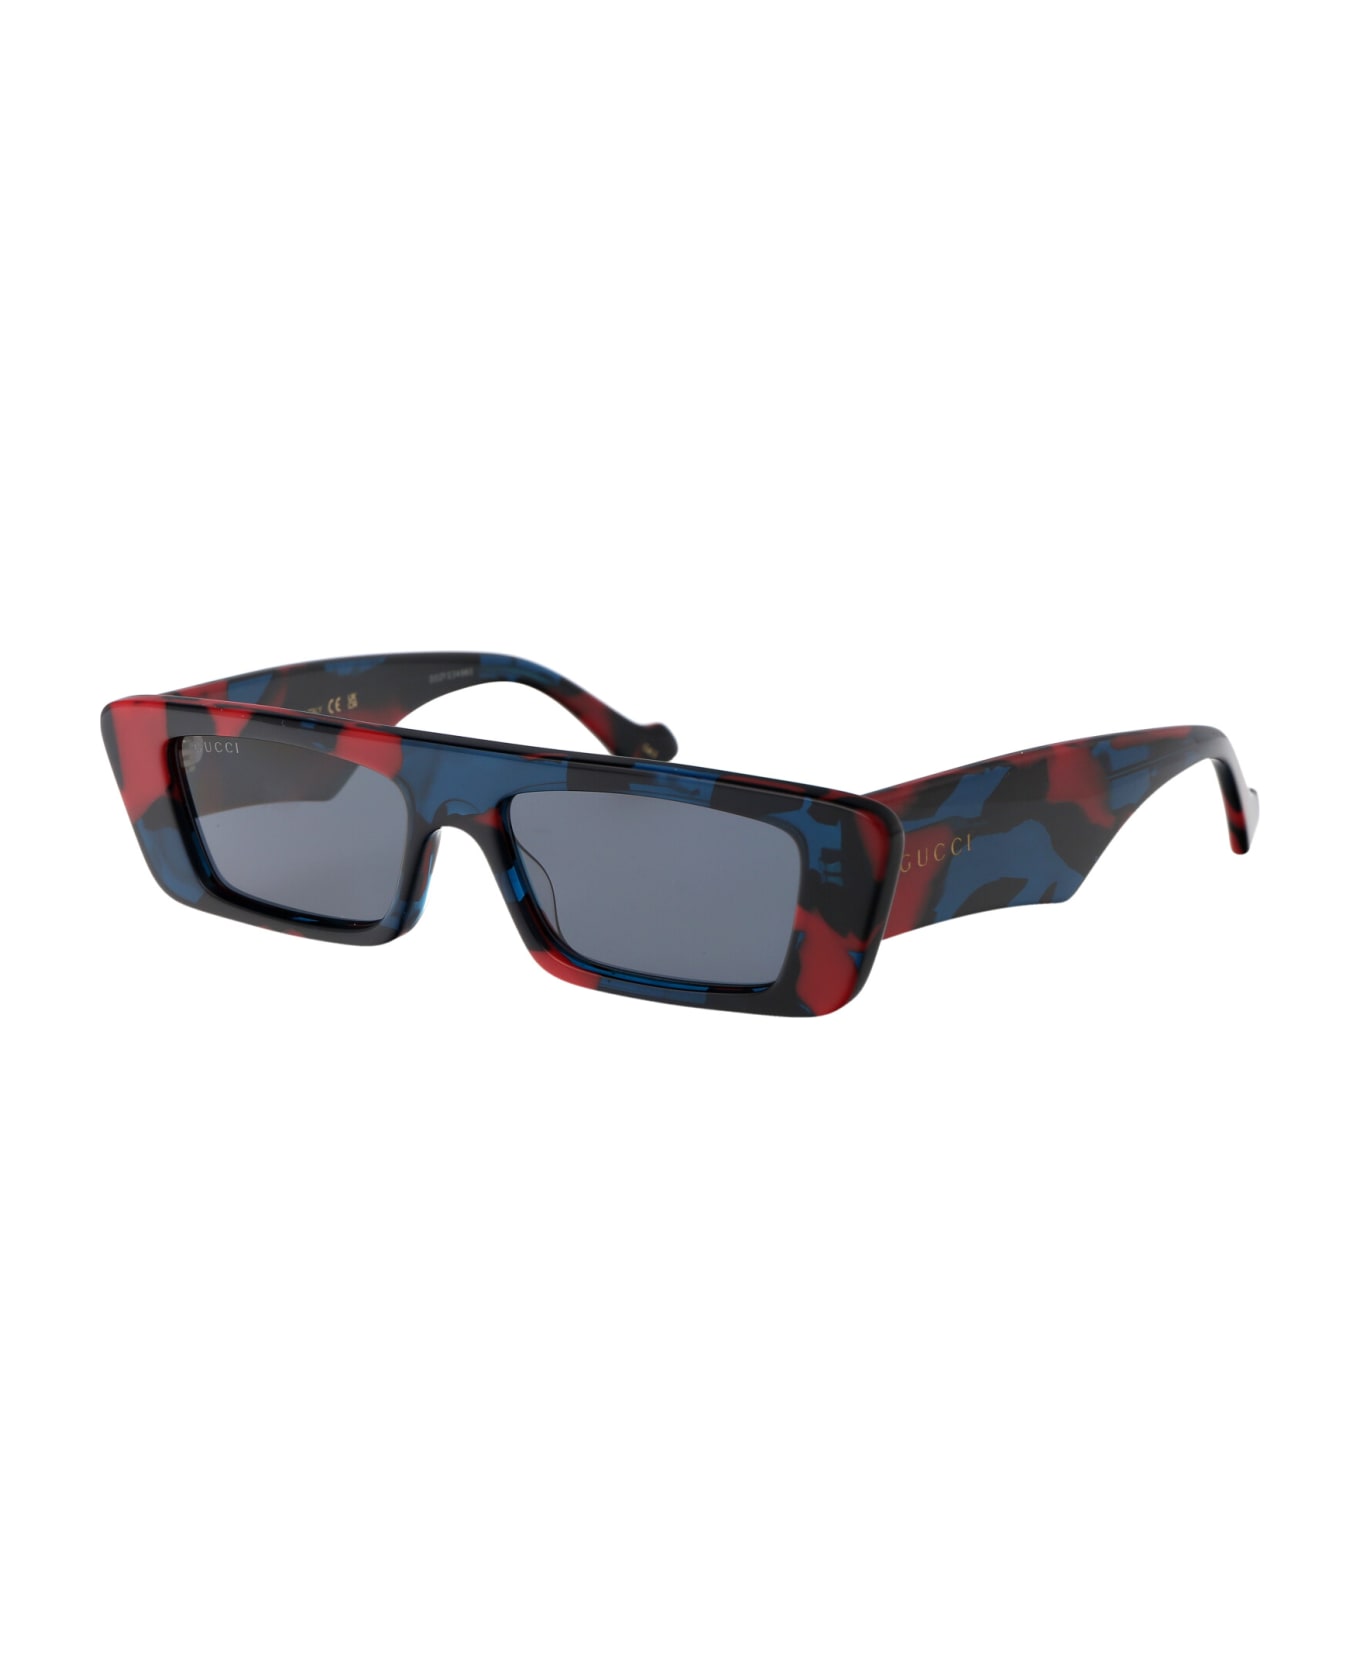 Gucci Eyewear Gg1331s Sunglasses - 007 HAVANA HAVANA BLUE